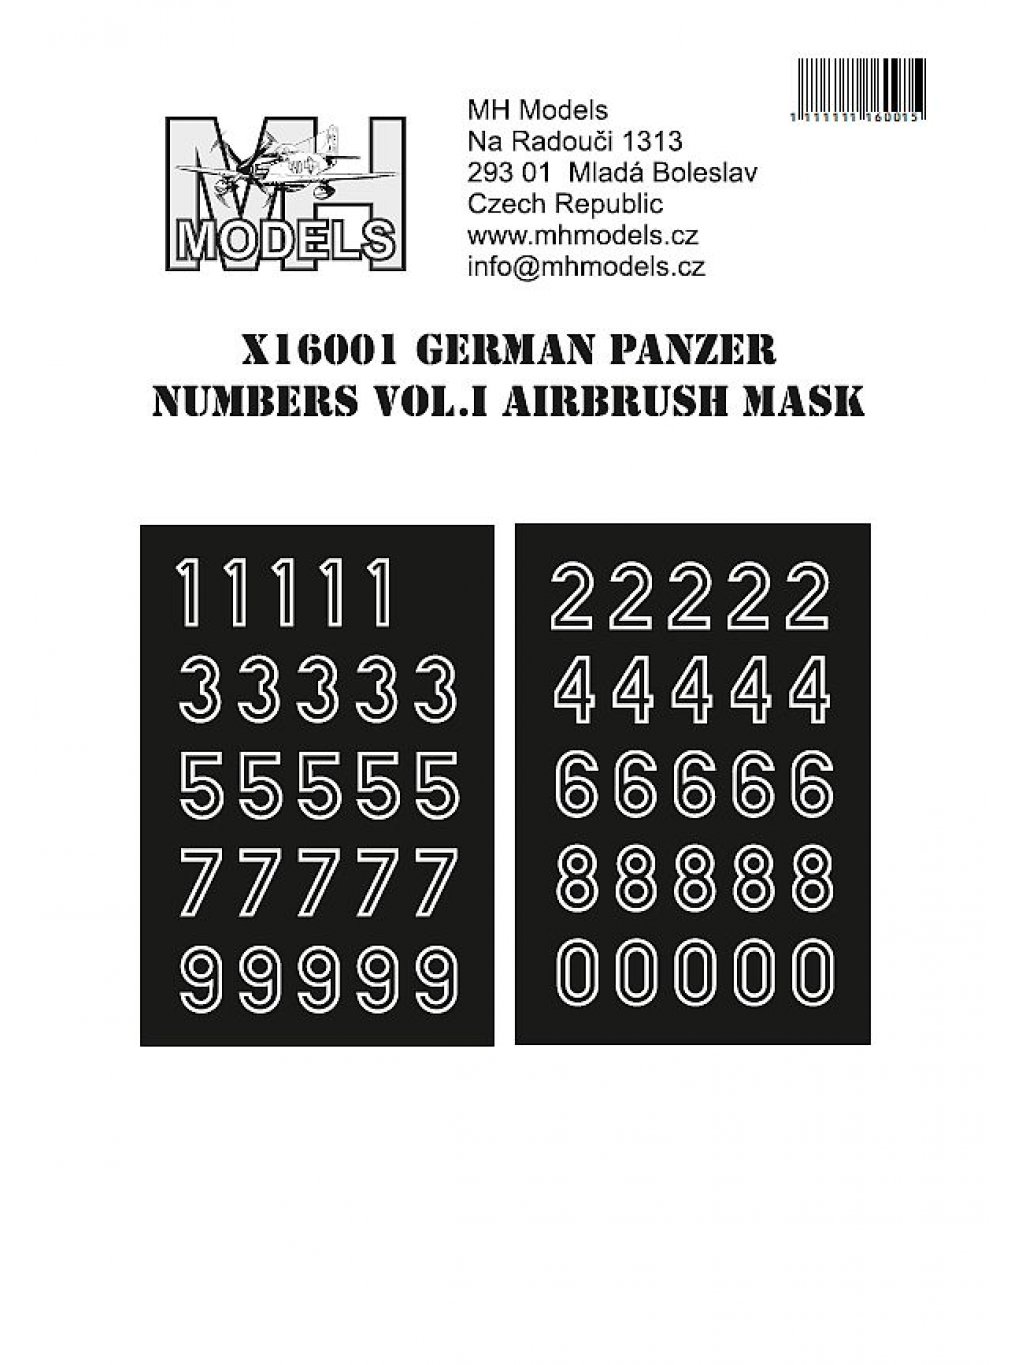 German panzer numbers vol.I airbrush mask